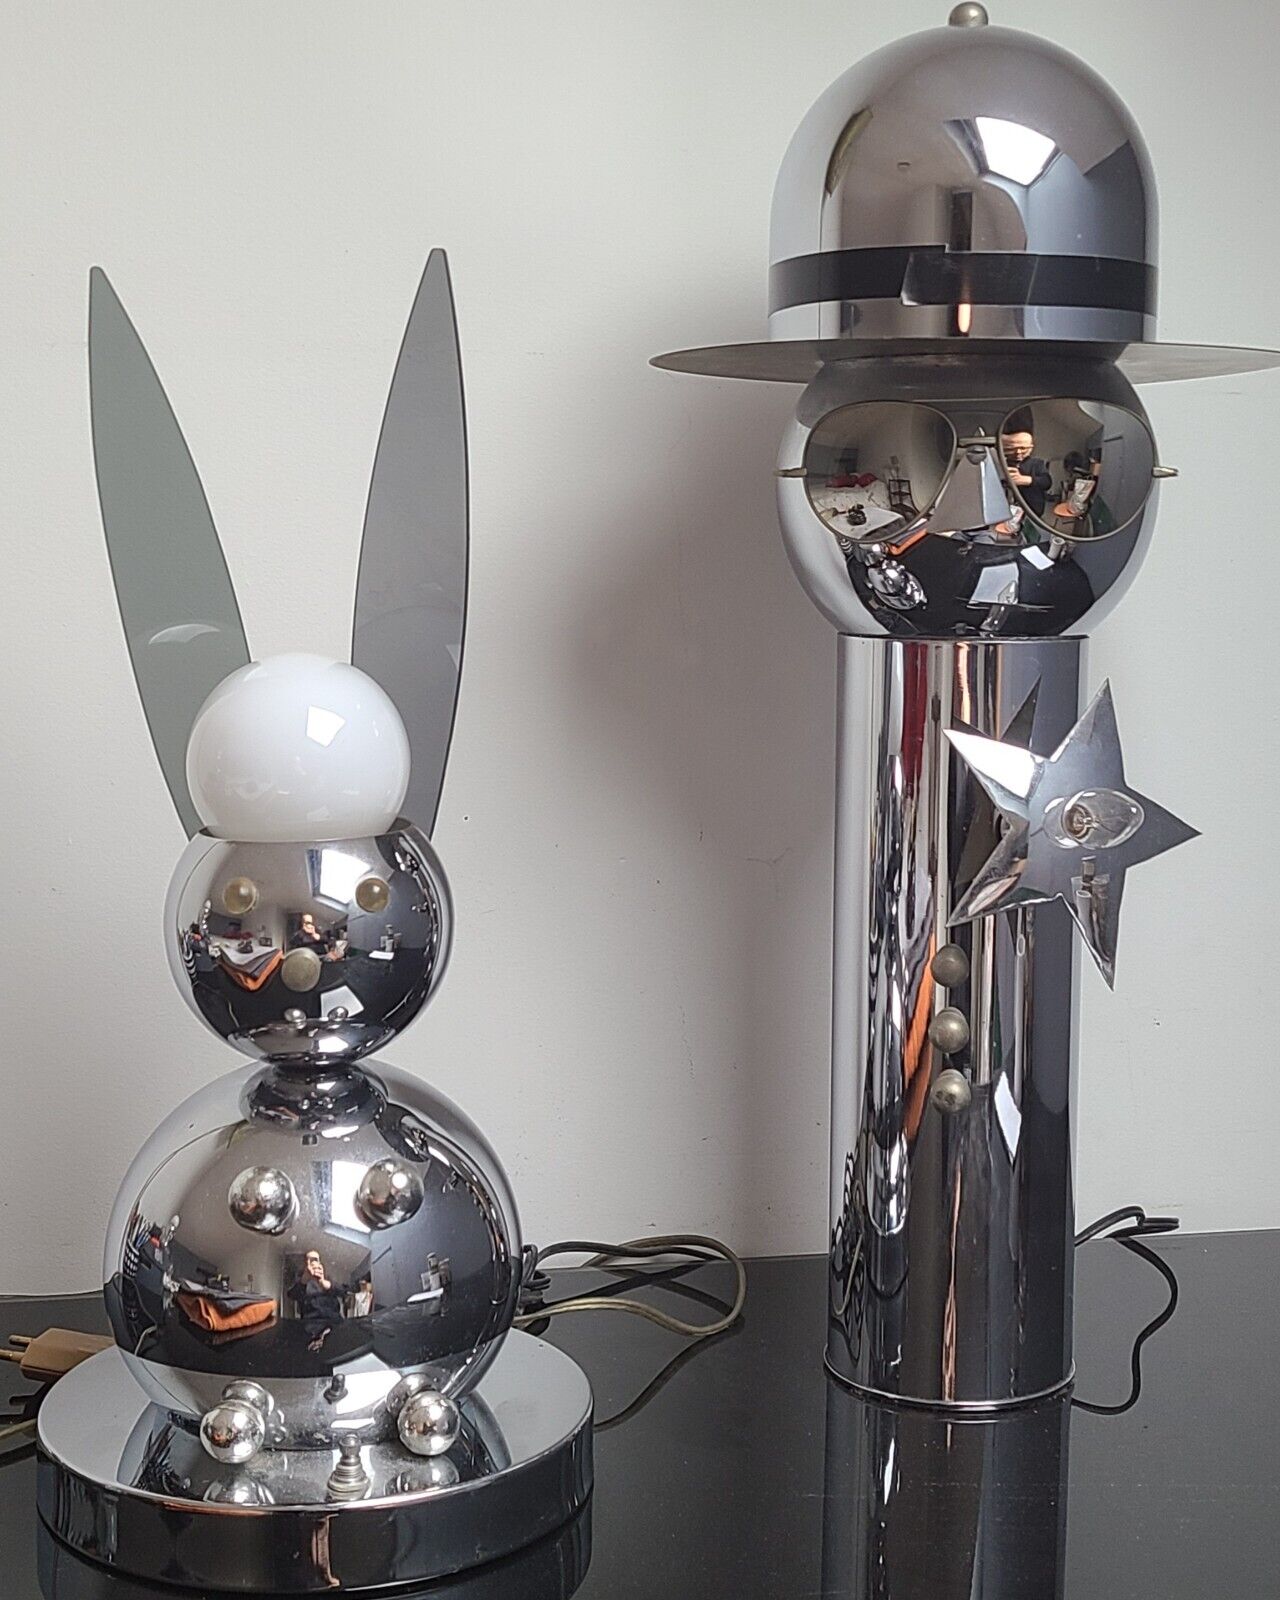 2 TORINO ROBOTS LAMPS BUNNY / POLICEMAN TABLE LAMP CO.1970